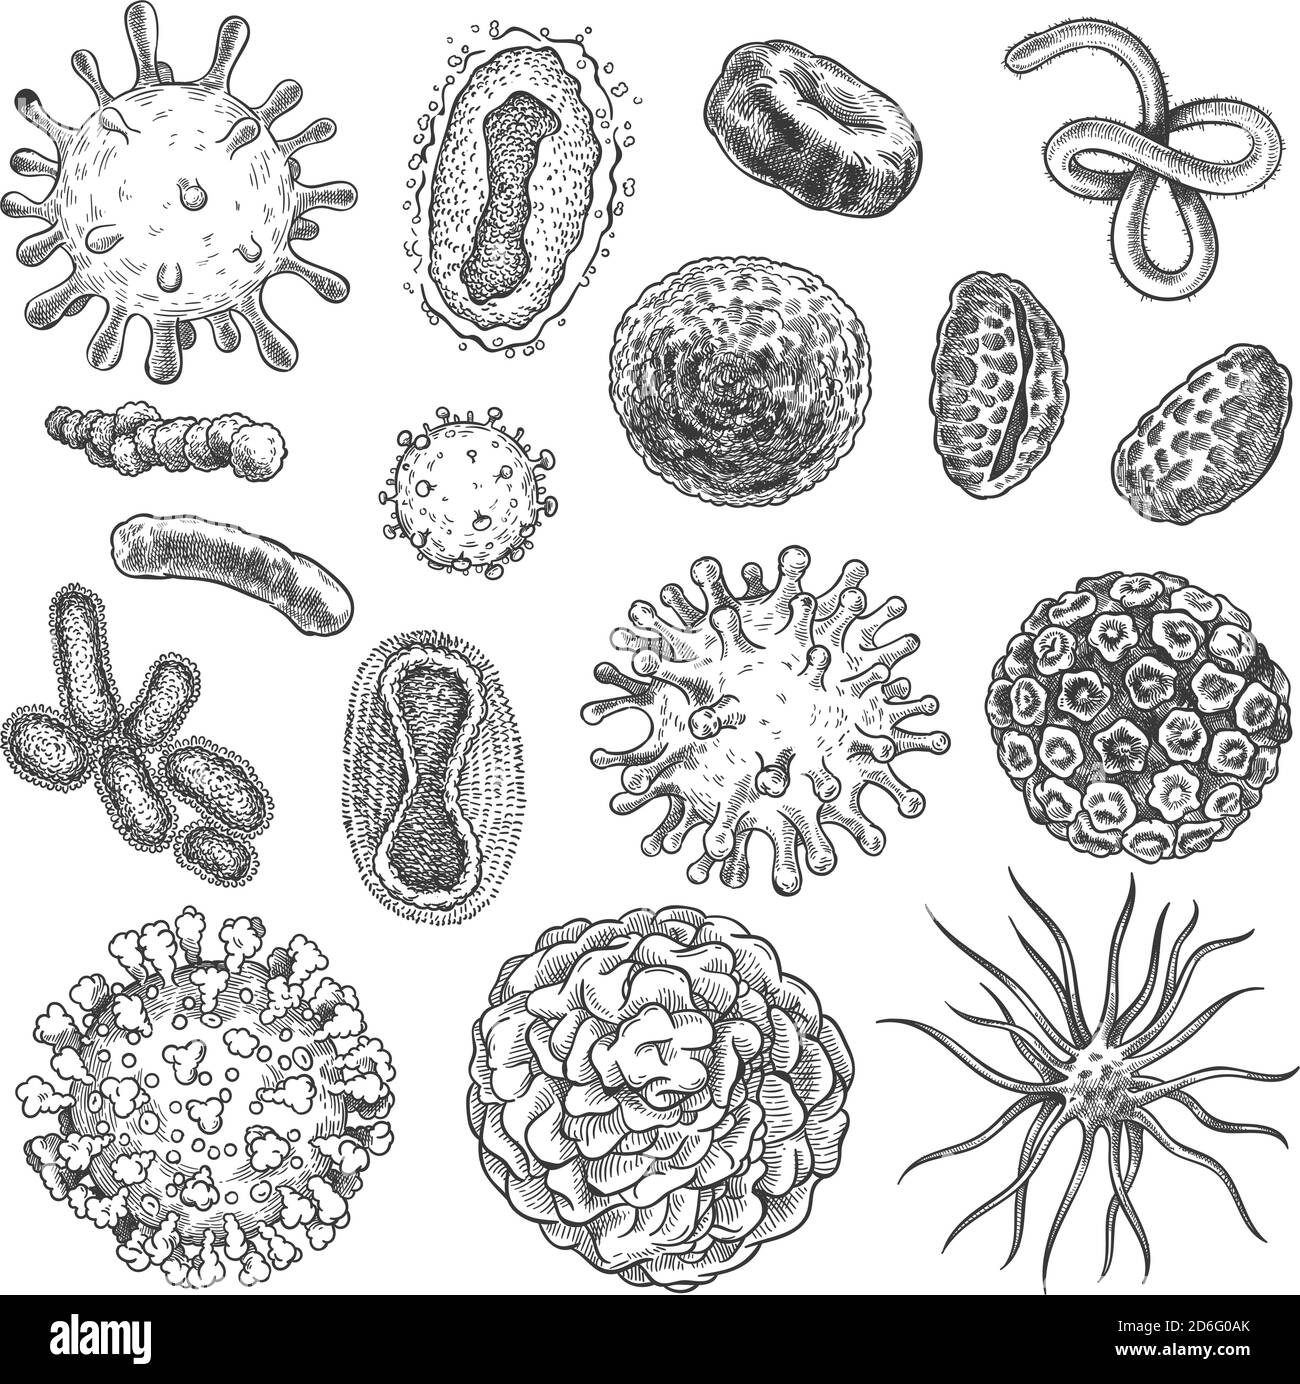 Virus de croquis. Bacterias, coronavirus biología germinal micro ...